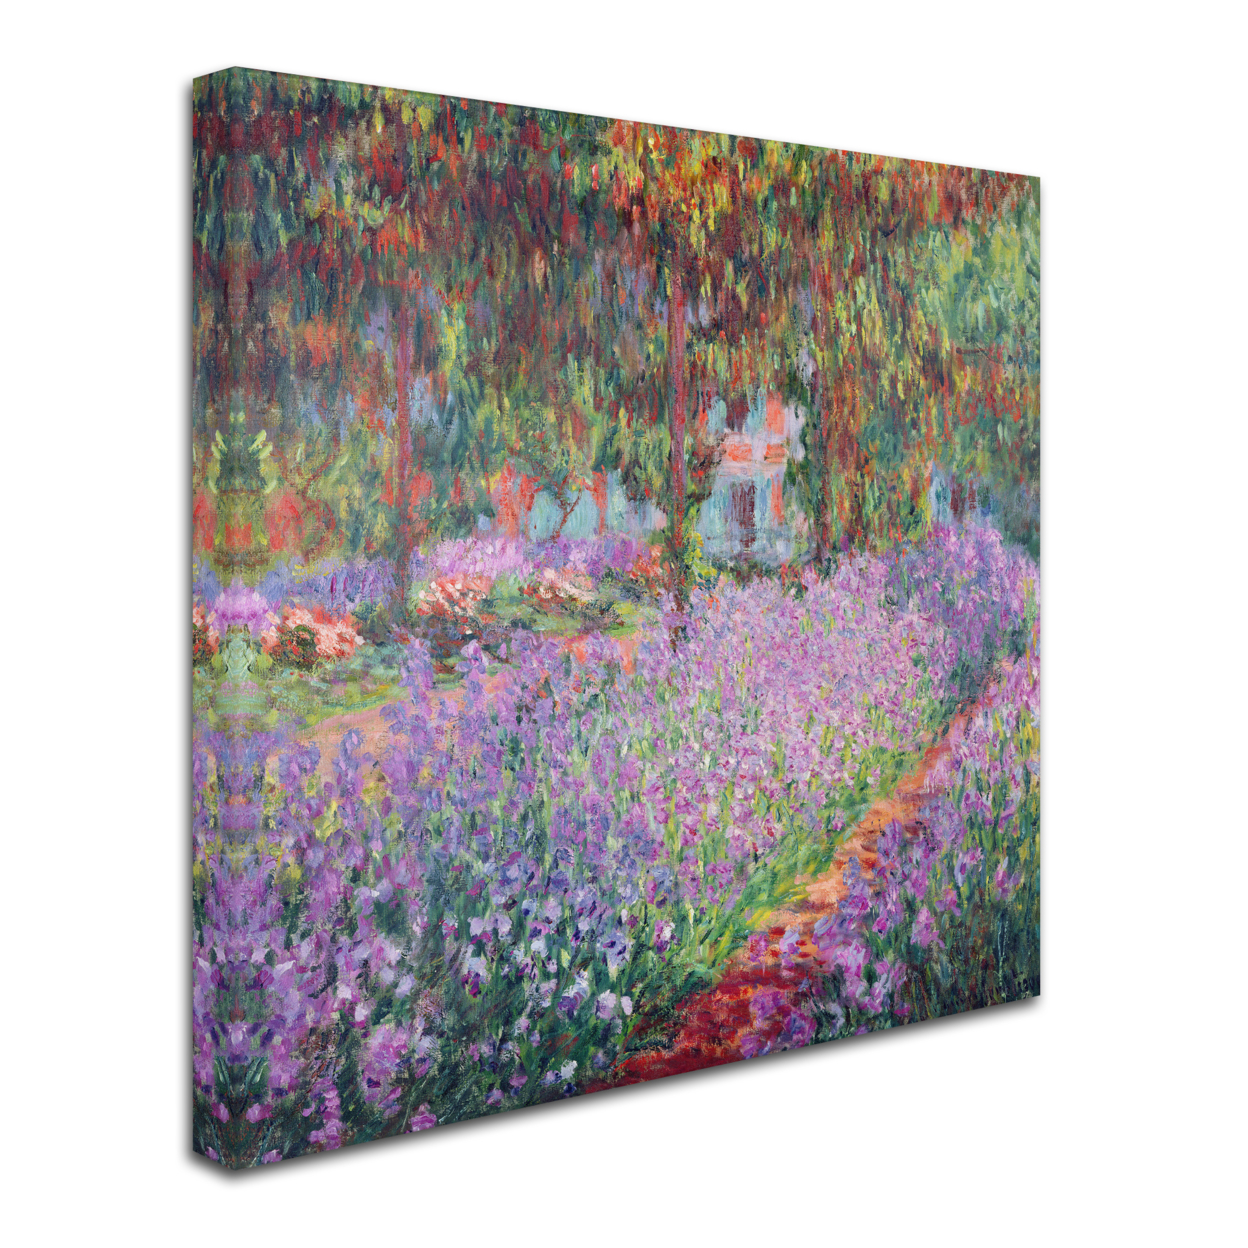 Claude Monet 'The Artist's Garden At Giverny' Huge Canvas Art 35 X 35